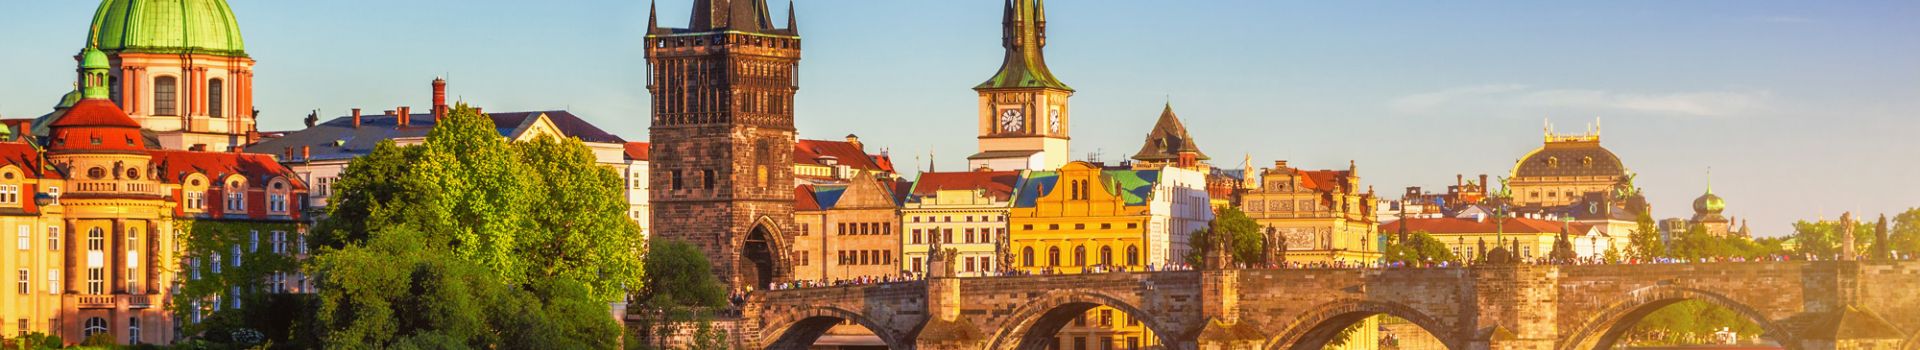 Book a City Break to Prague